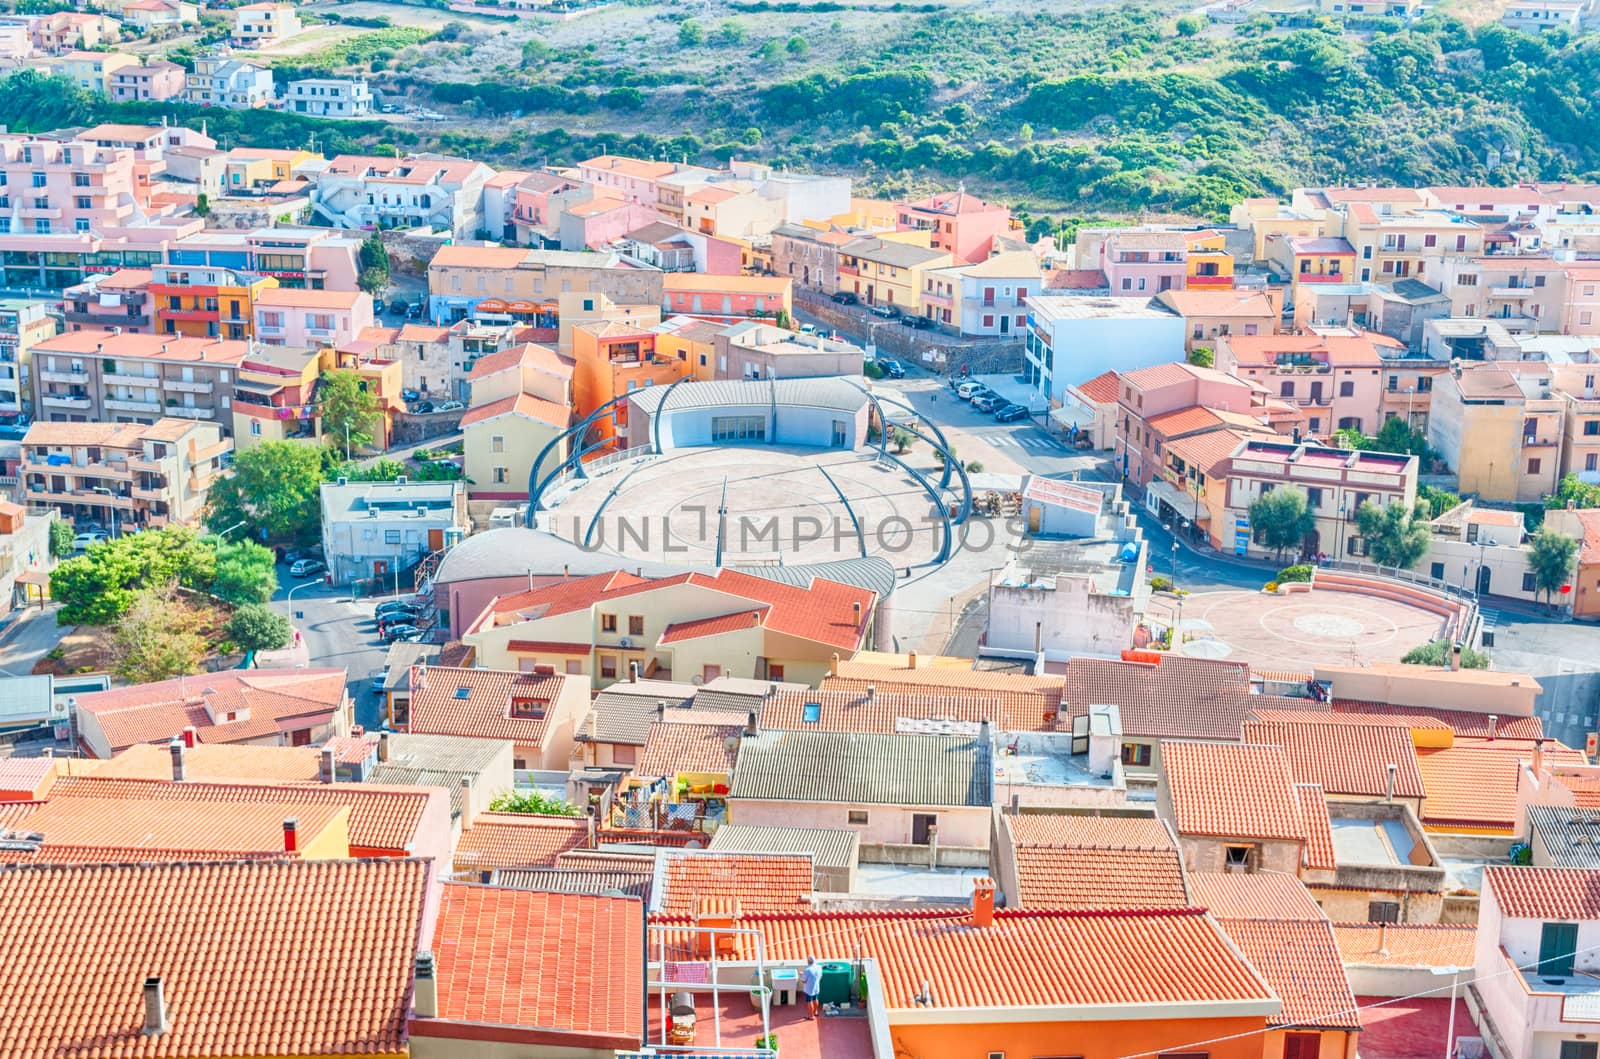 View from castelsardo old city - Sardinia - Italy